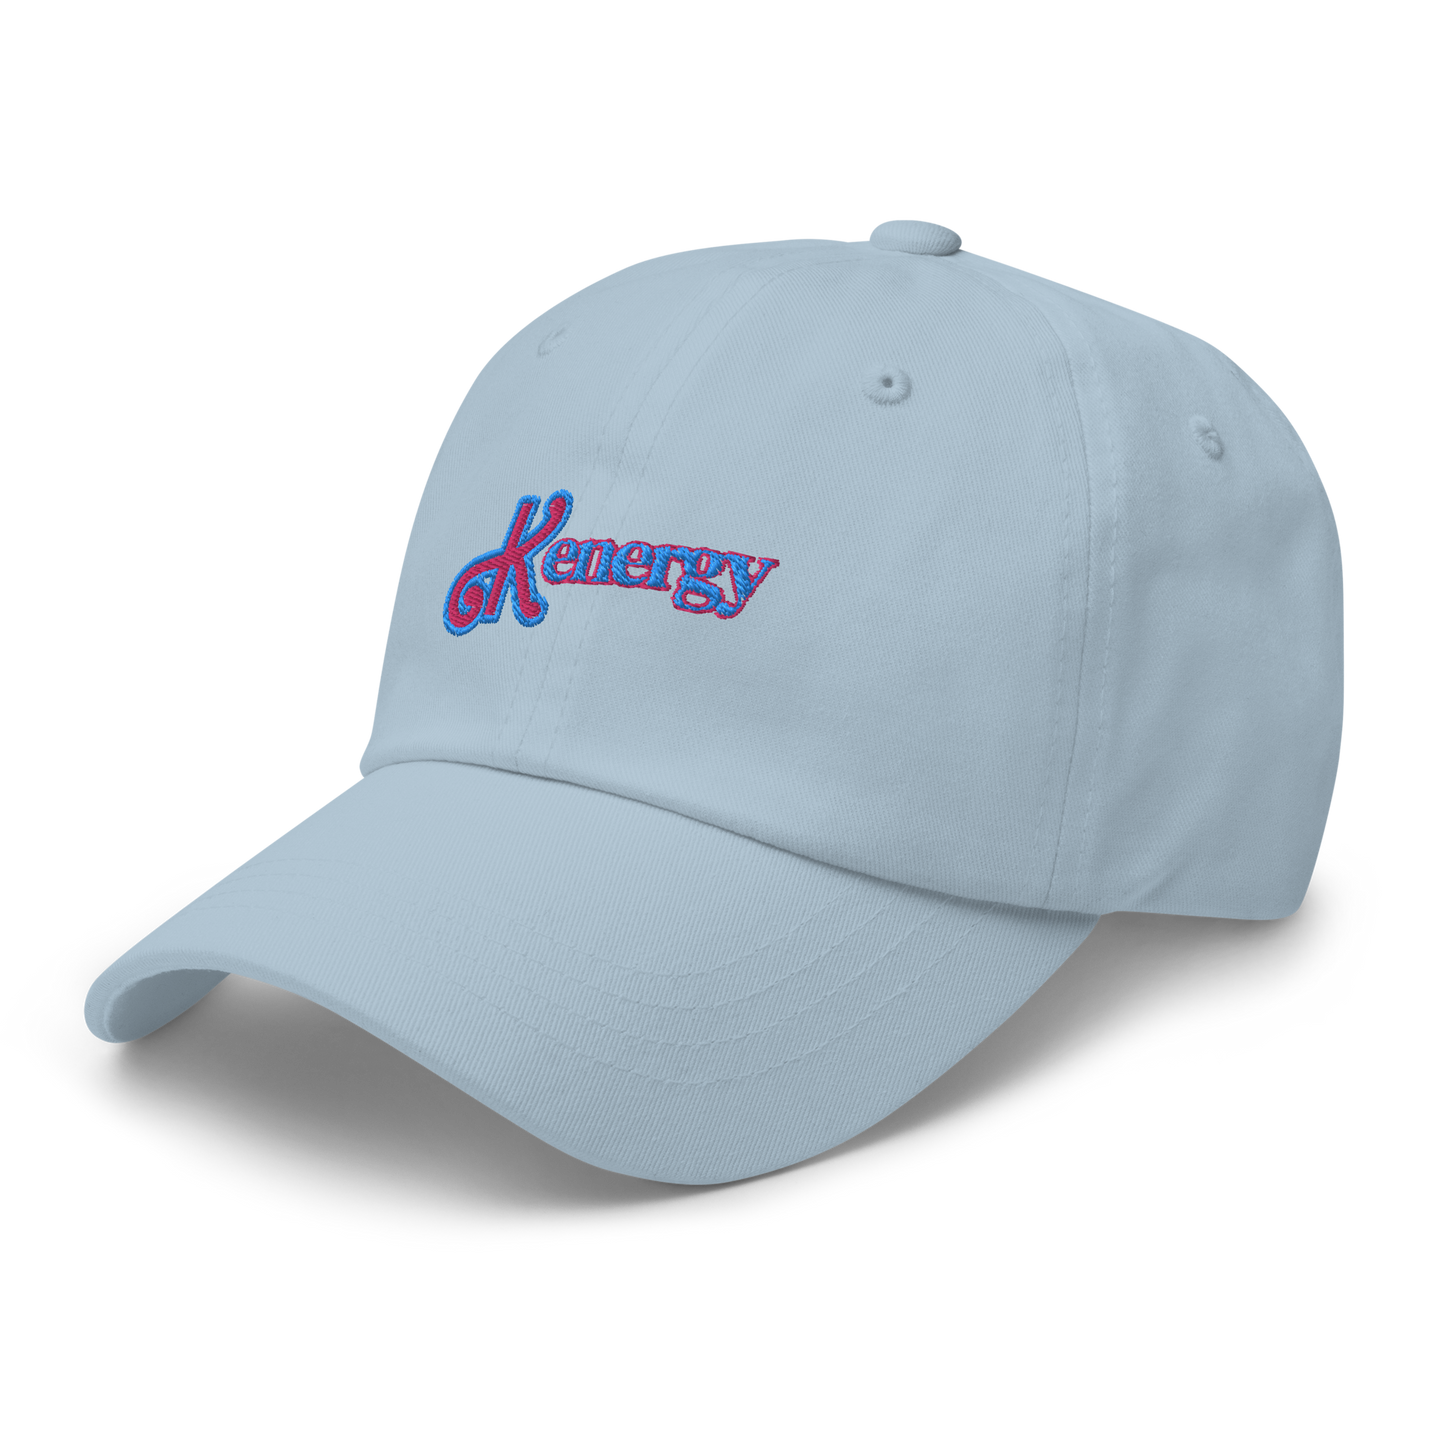 Kenergy Dad hat